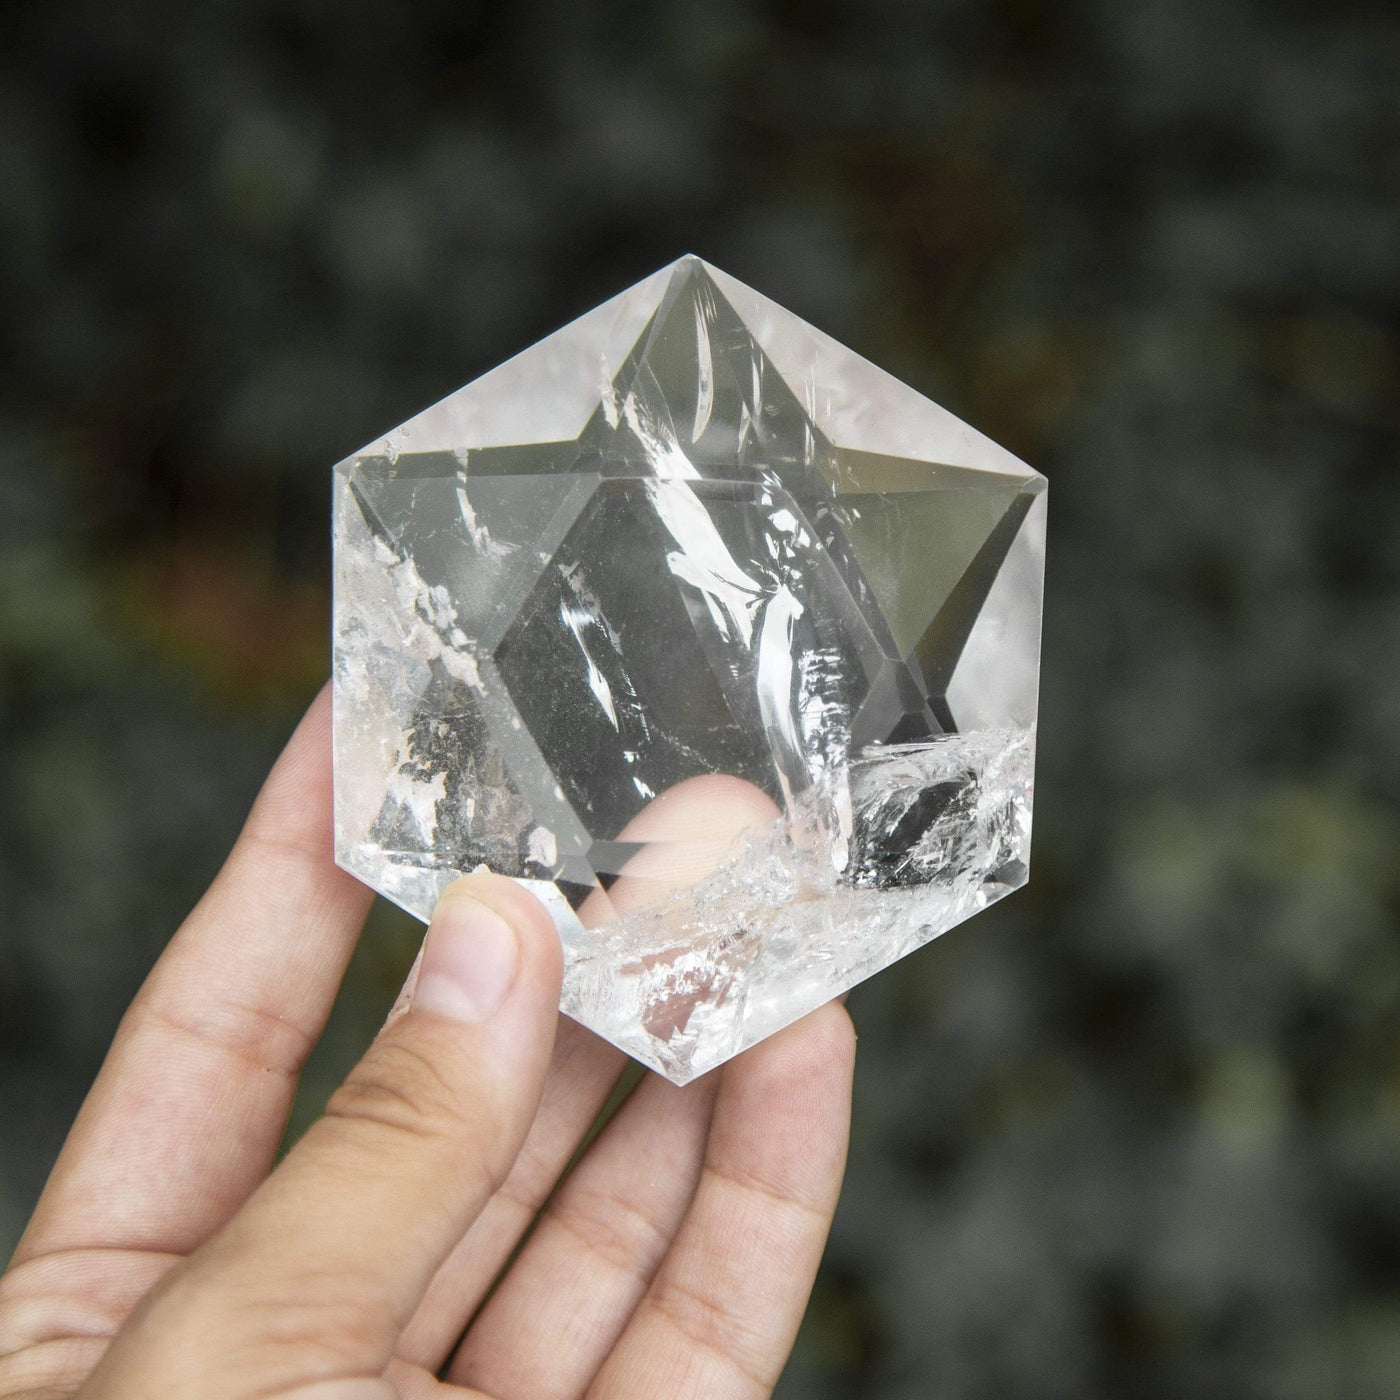 hand holding up crystal quartz hexagonal pocket stone in front of dark background